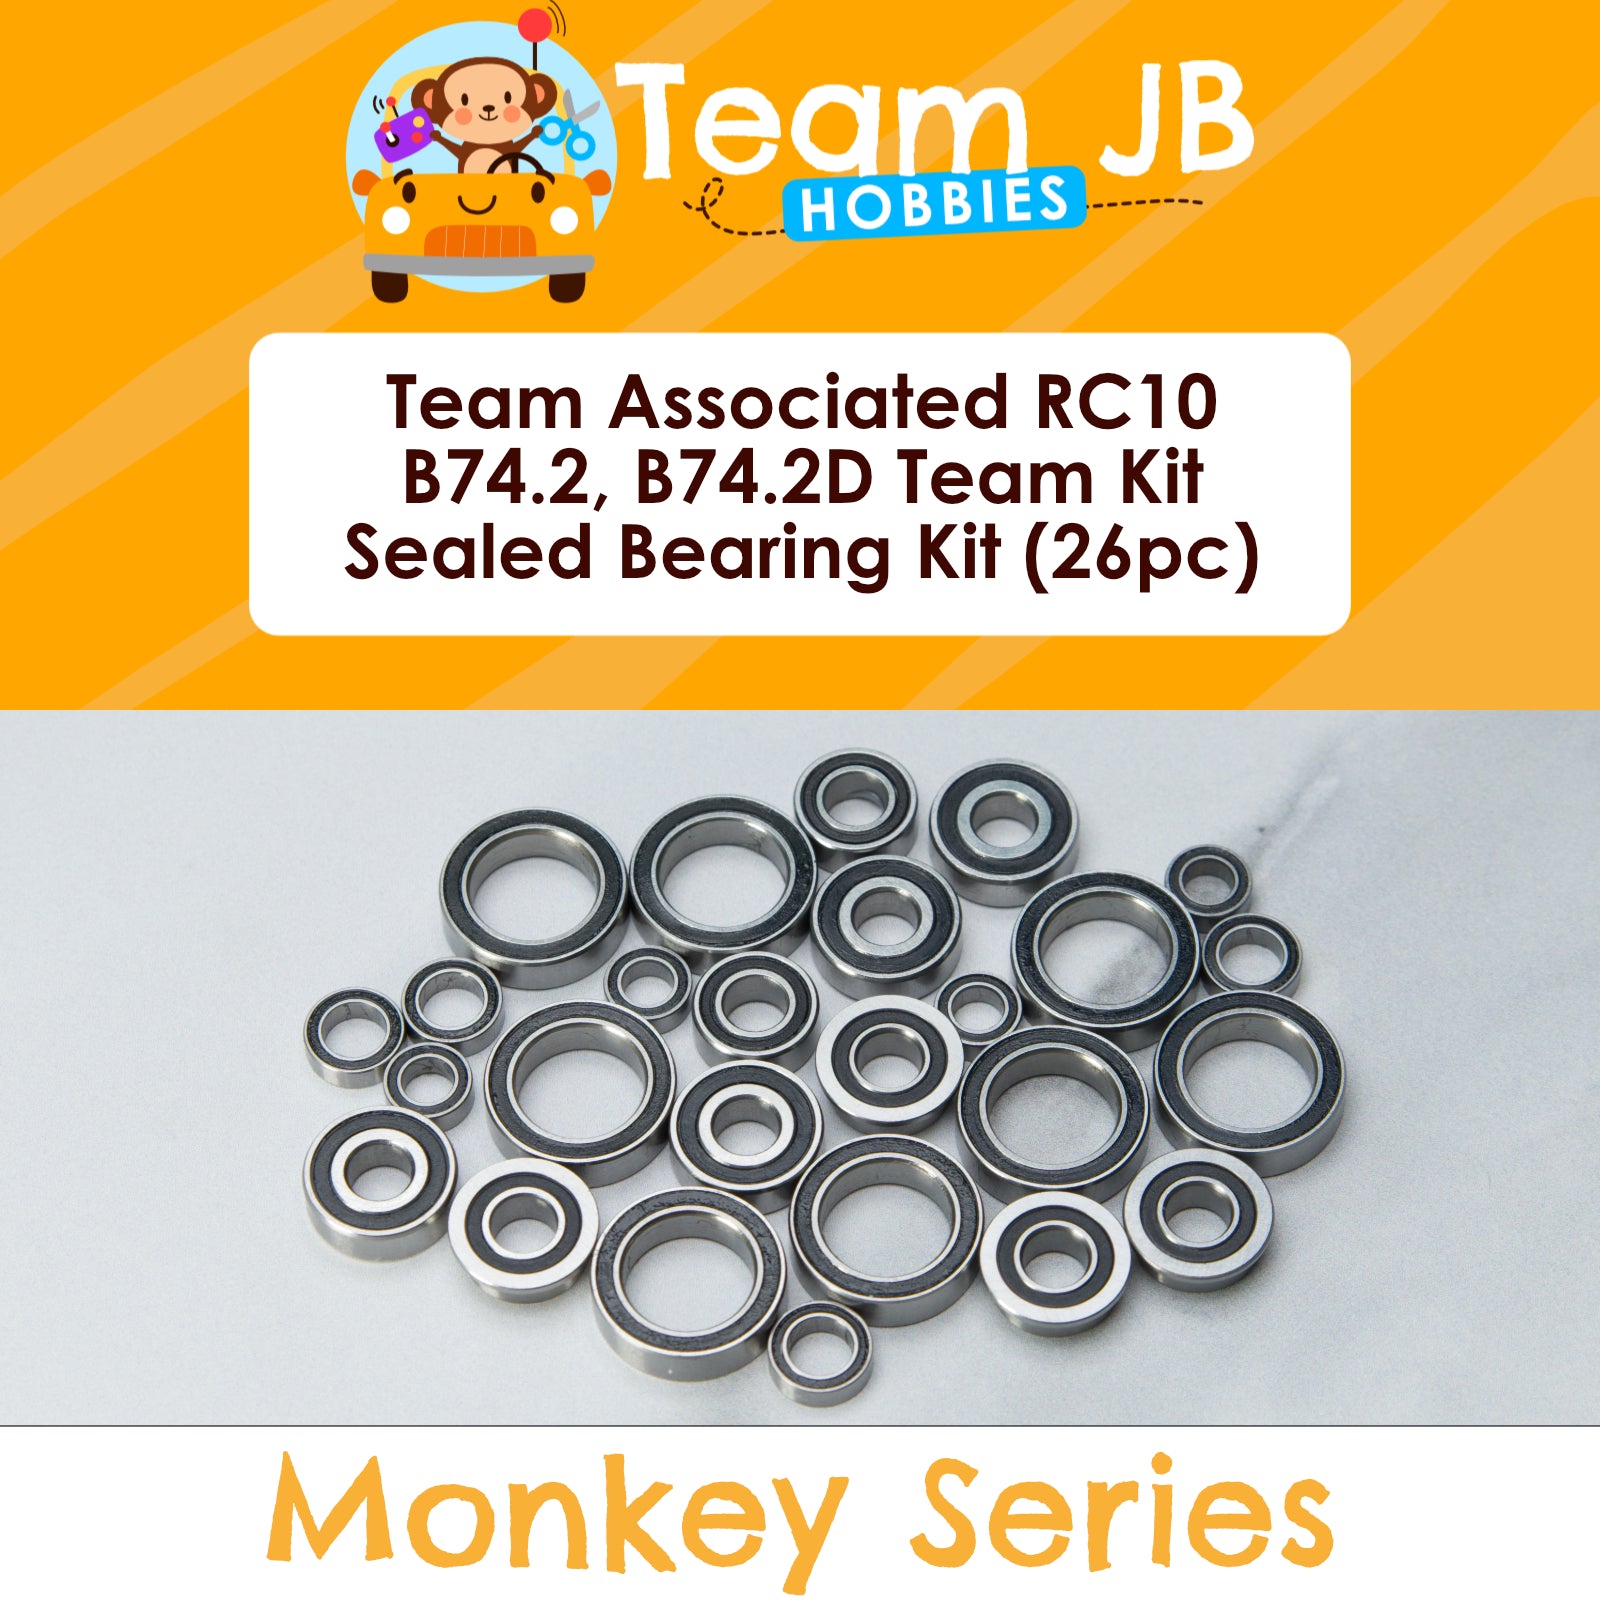 Team Associated RC10 B74.2 Team Kit, RC10 B74.2D Team Kit - Sealed Bearing Kit